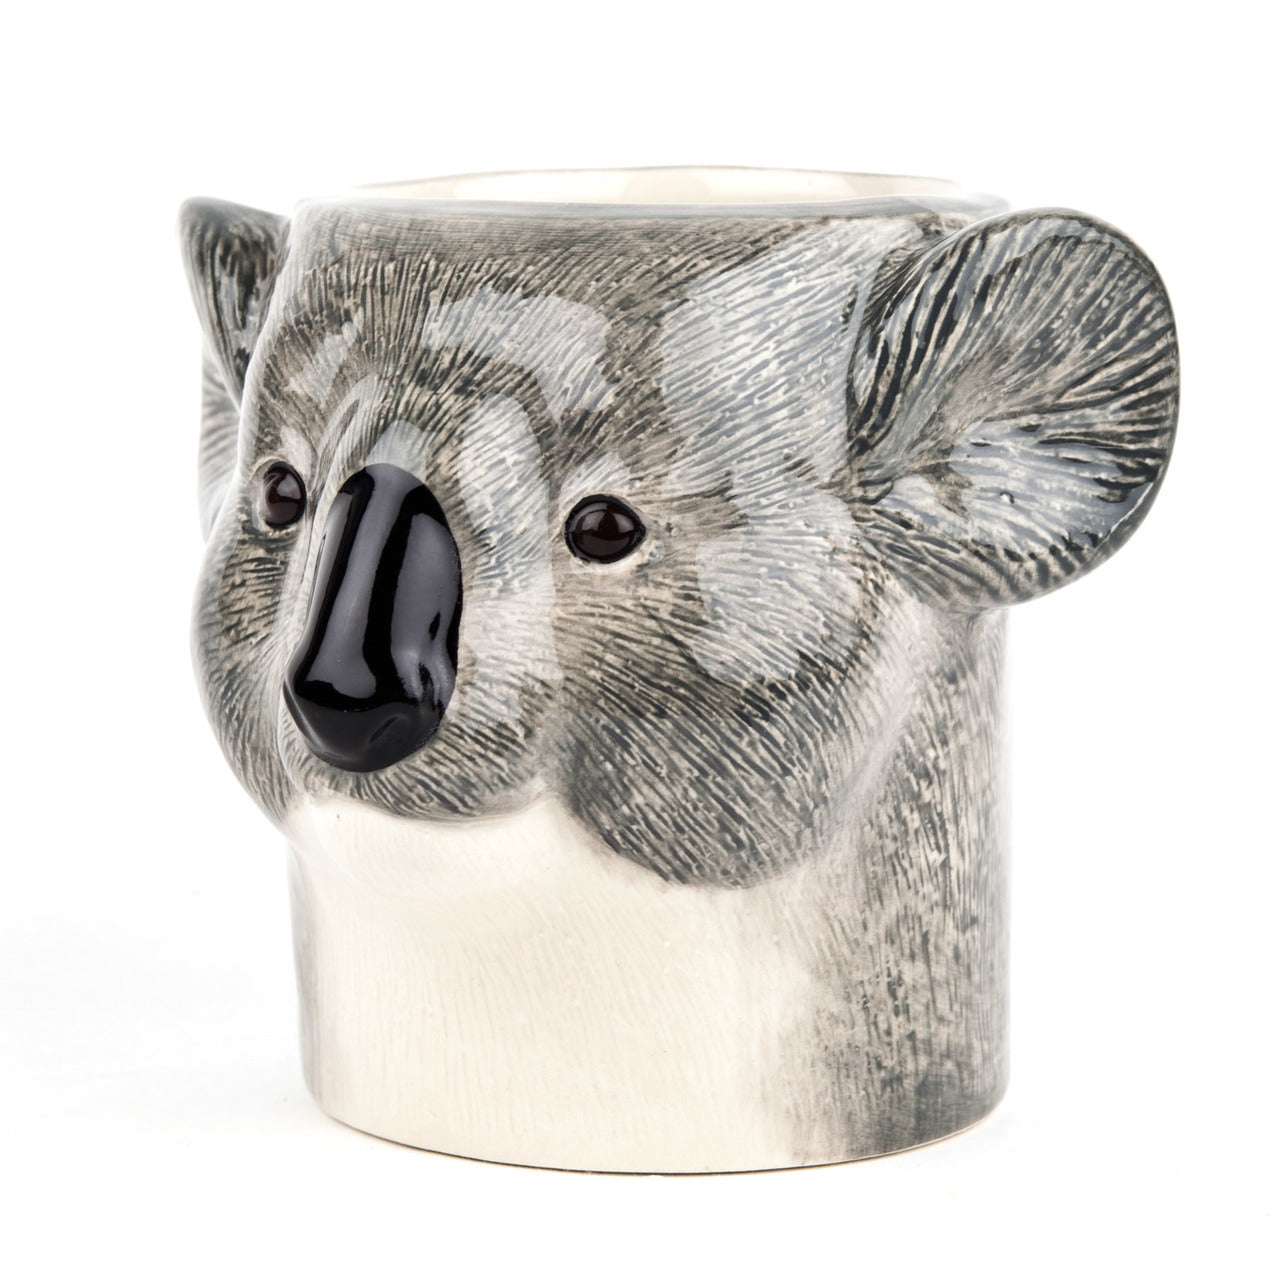 Ceramic Koala Mug and/or Pencil Pot - Luvit!